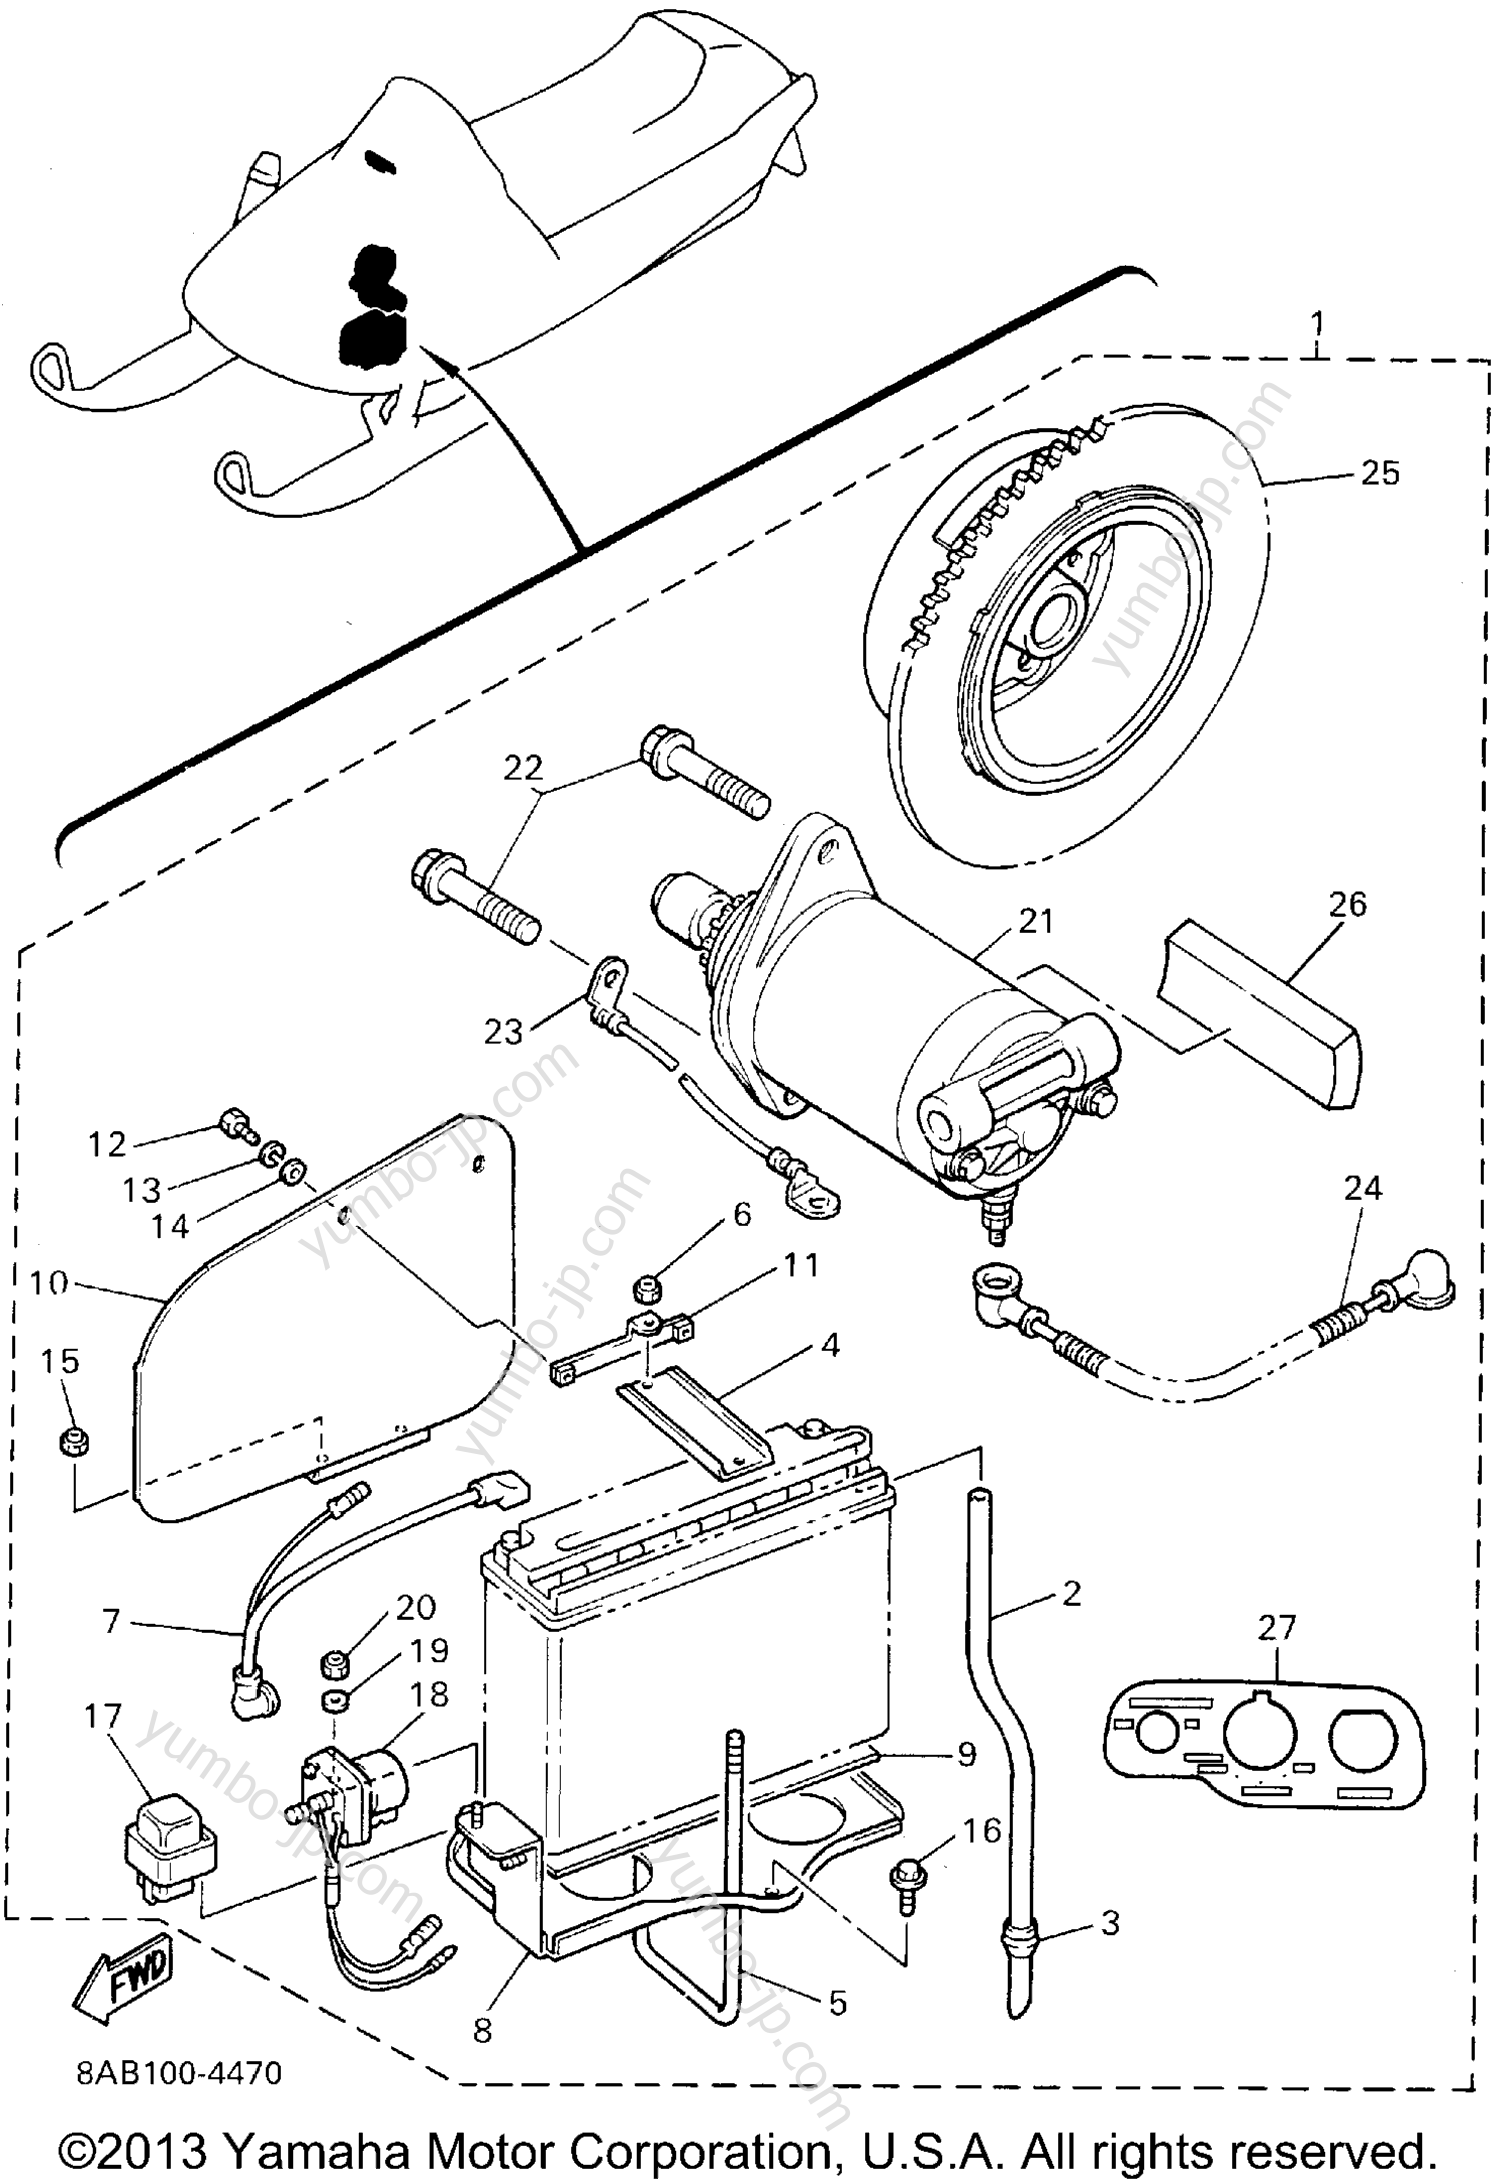 Electric Start Kit (Alternate) for snowmobiles YAMAHA VMAX 600 ST (VX600STU) 1994 year